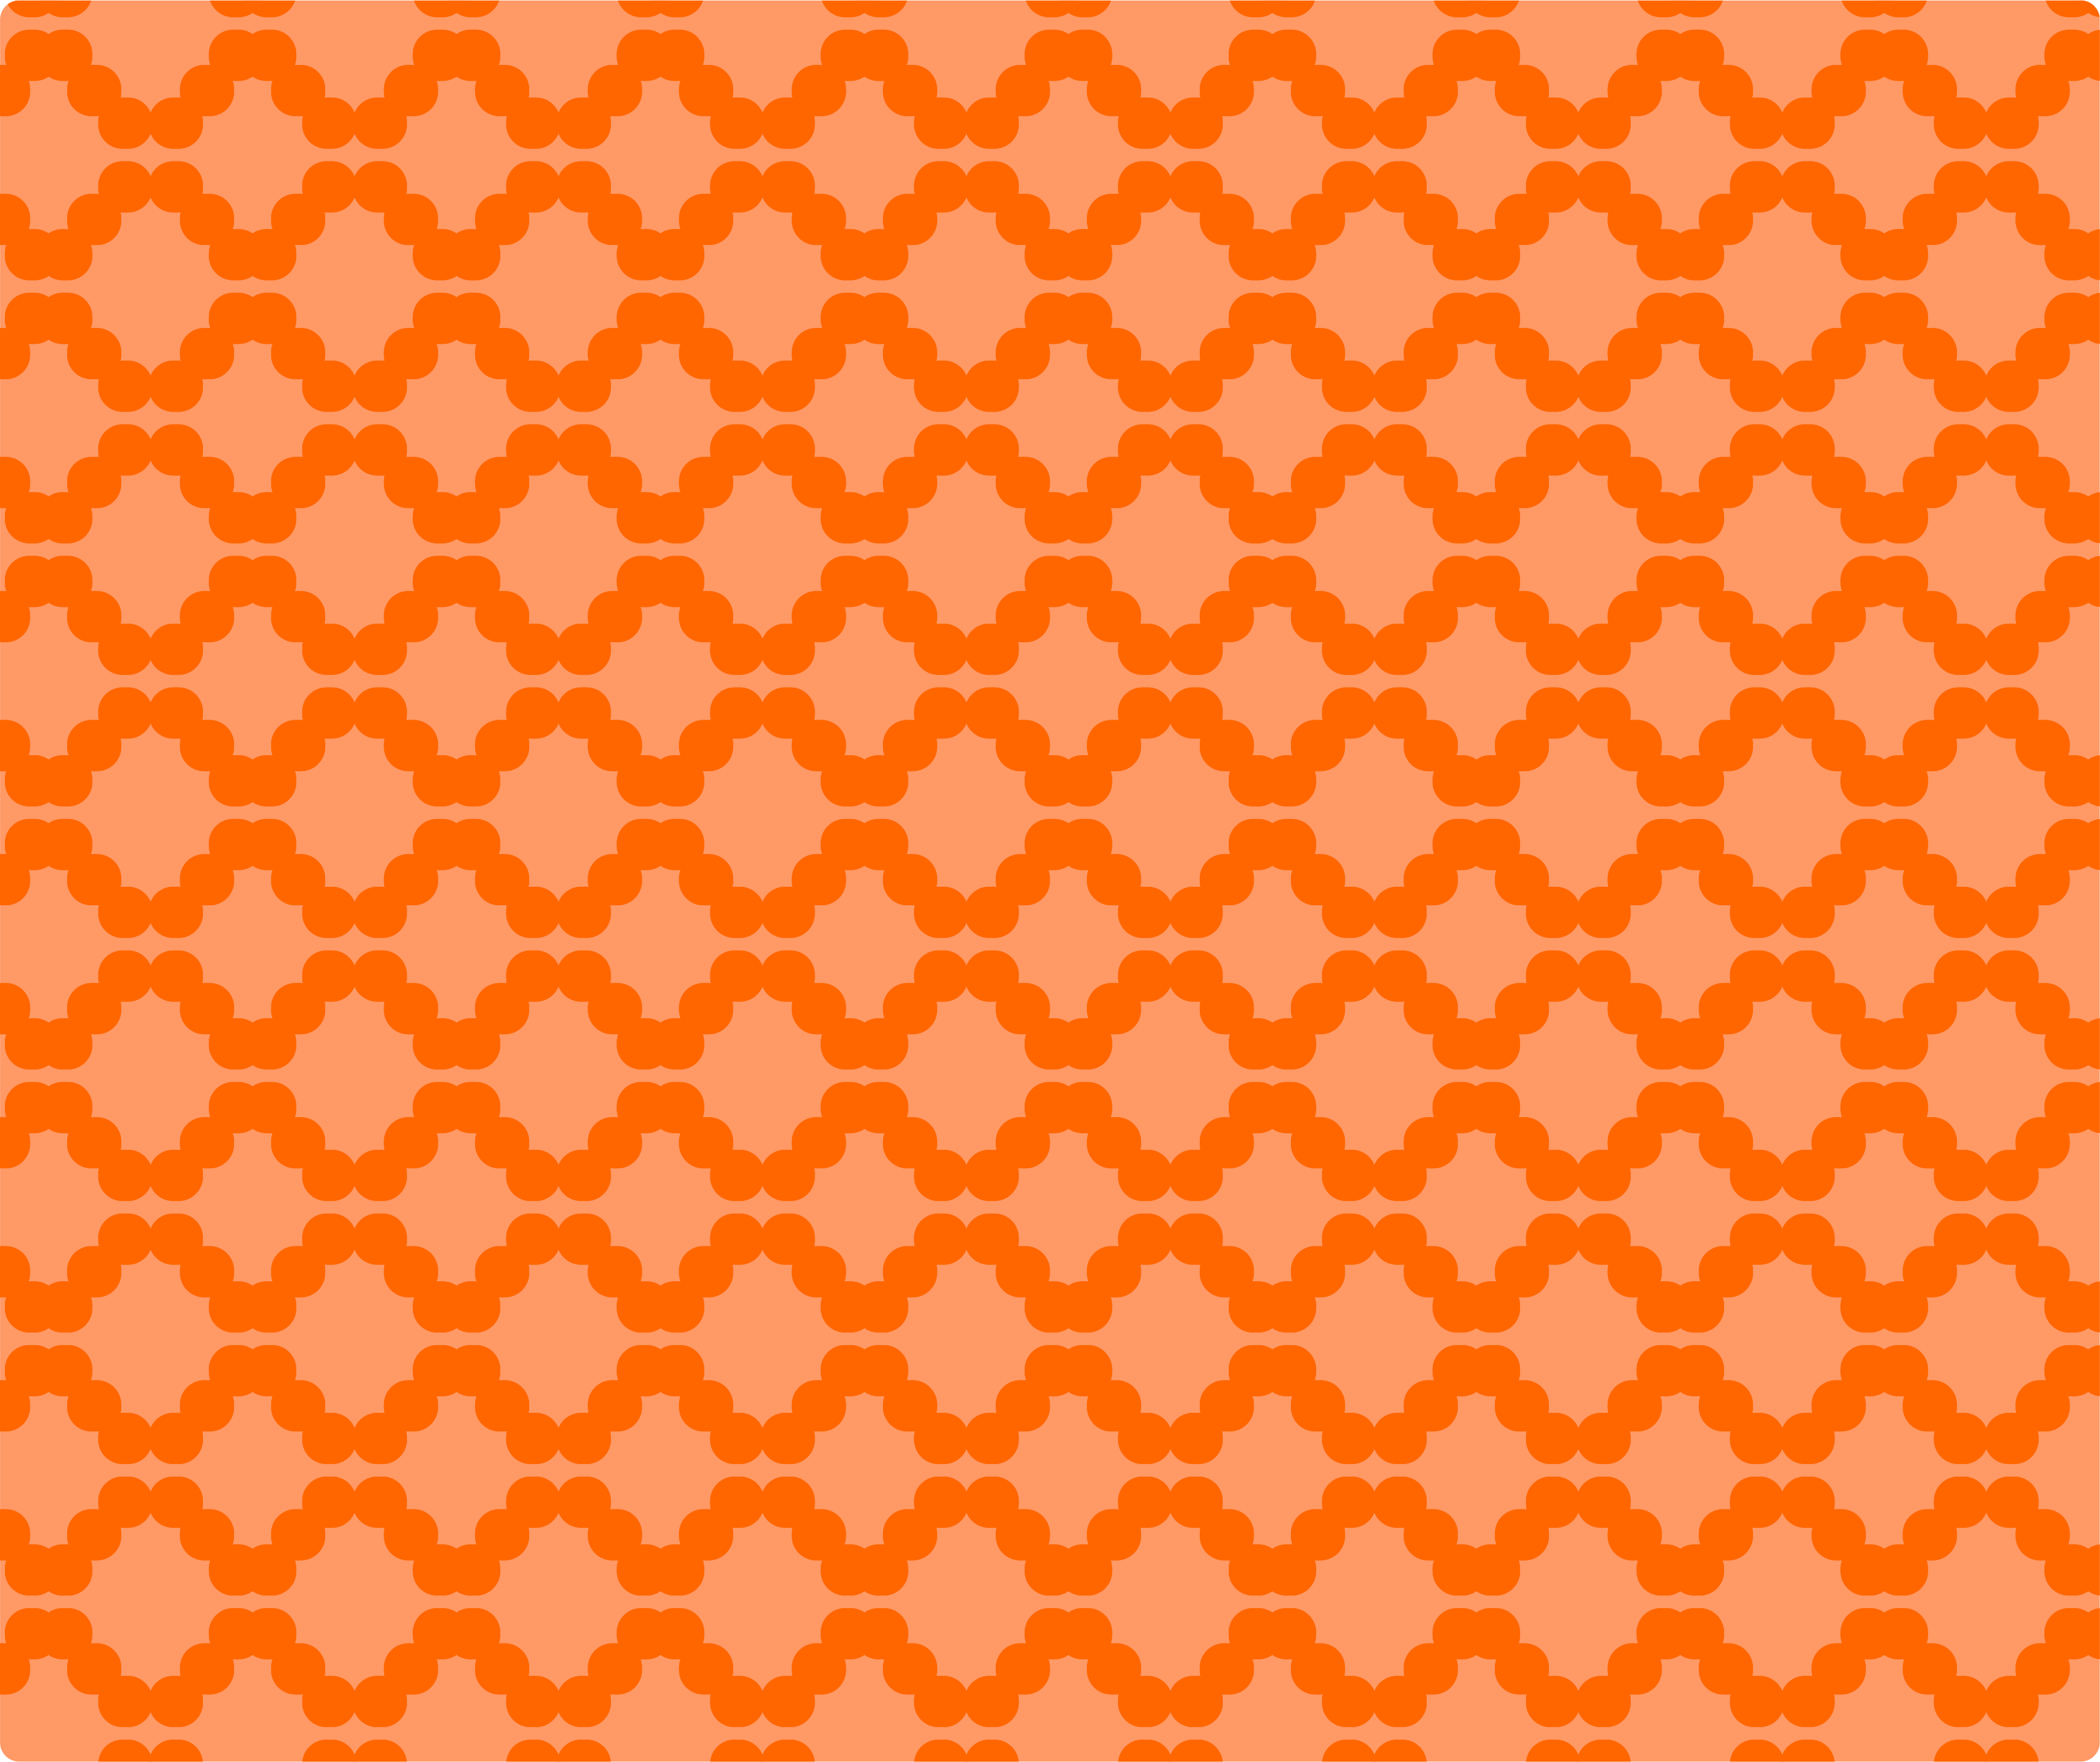 Orange Wallpaper With Seamless Pattern Image